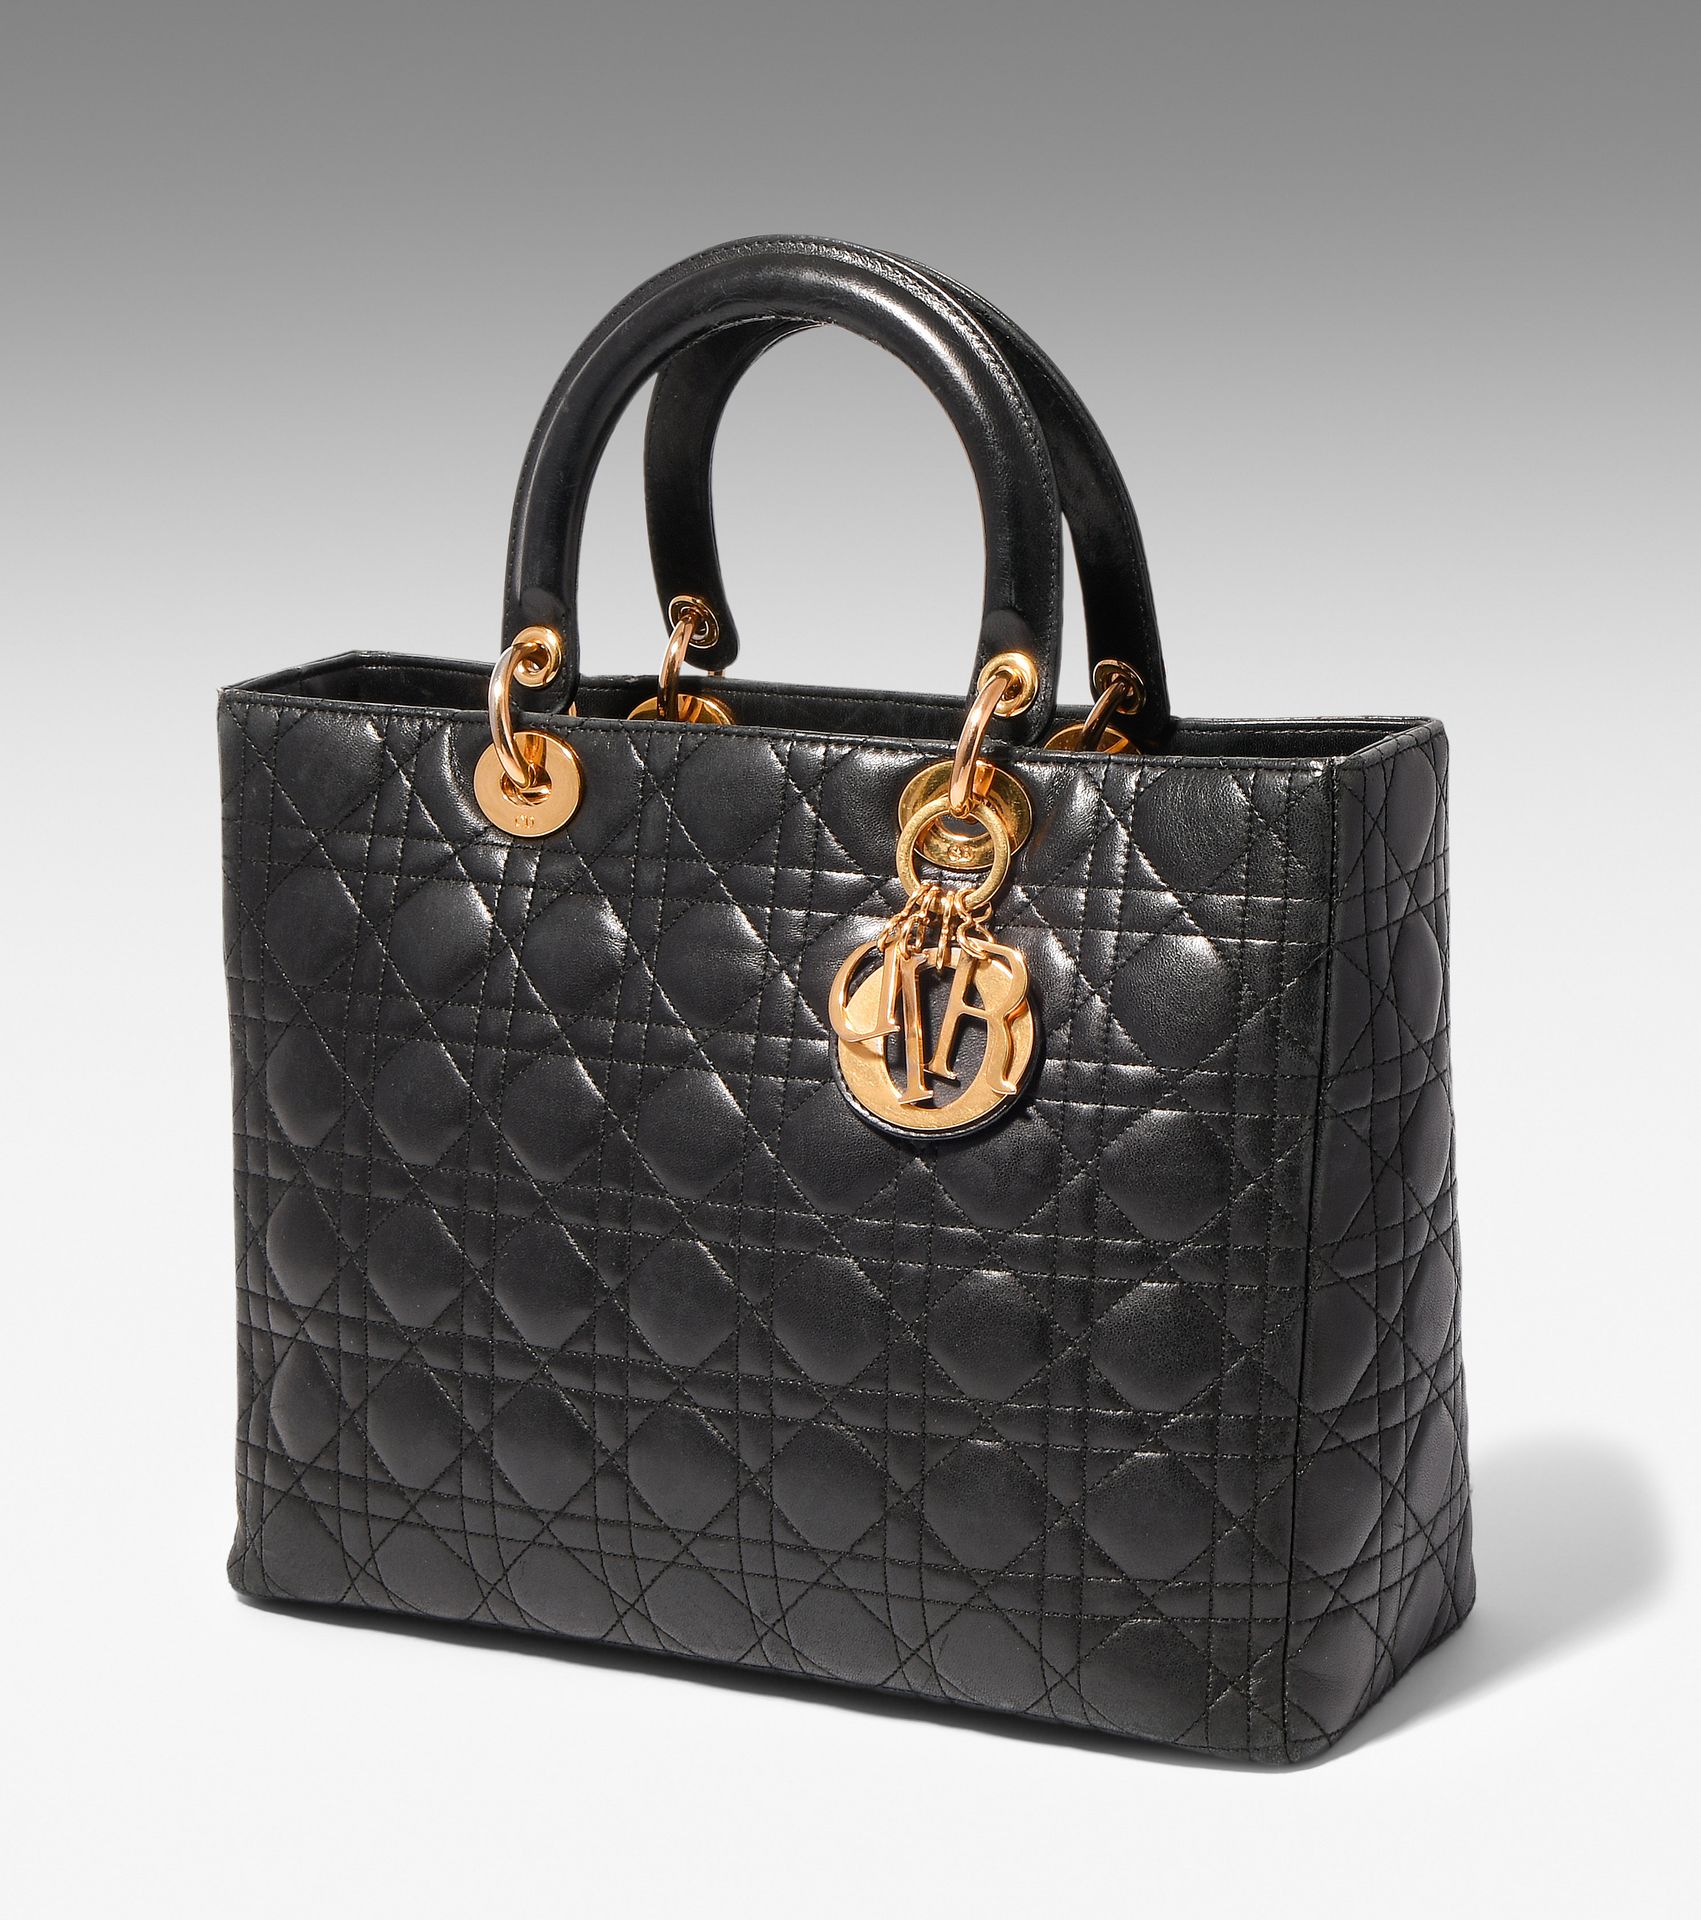 Dior, Handtasche "Lady Dior" 迪奥，"Lady Dior "手提包
由黑色绗缝皮革制成。金色的金属配件。两个圆形手柄。拉链封口。D.&hellip;